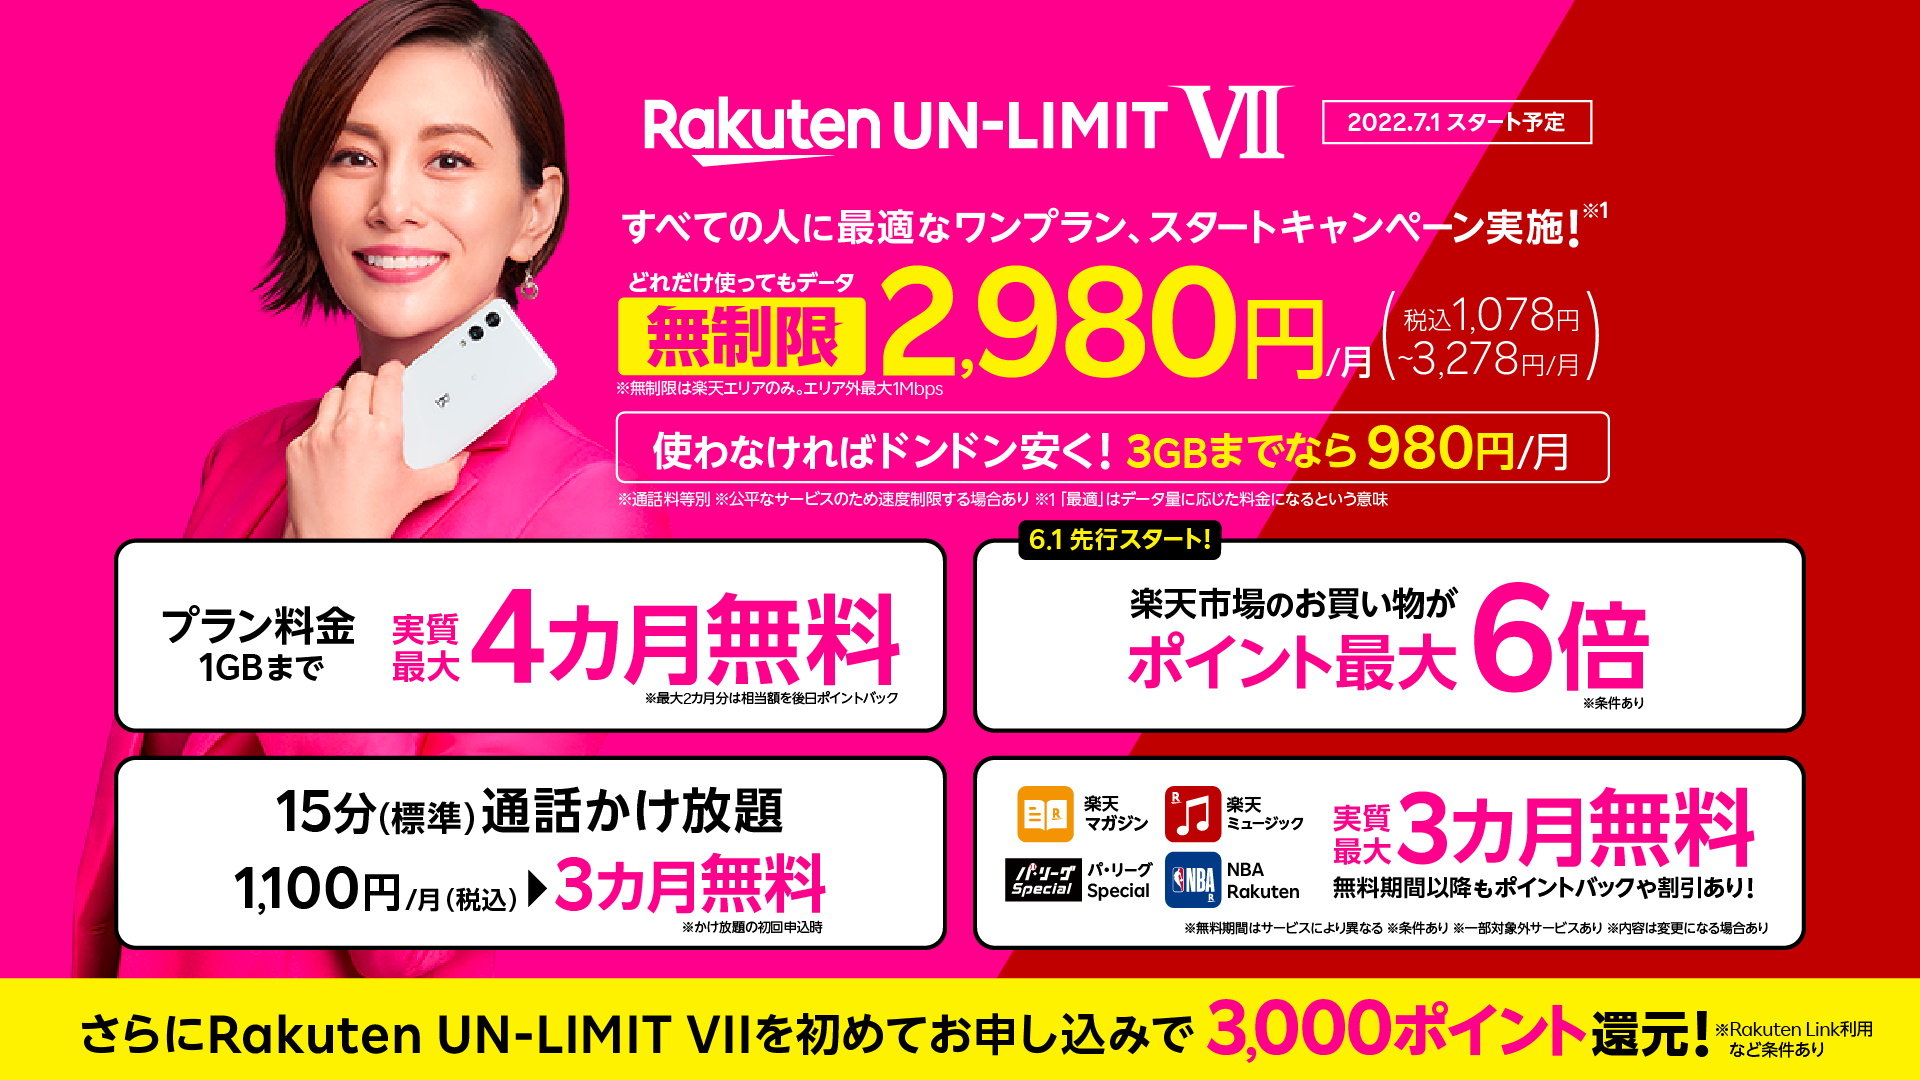 Rakuten UN-LIMIT VII」徹底解説 「0円廃止」でも楽天モバイルに残る ...